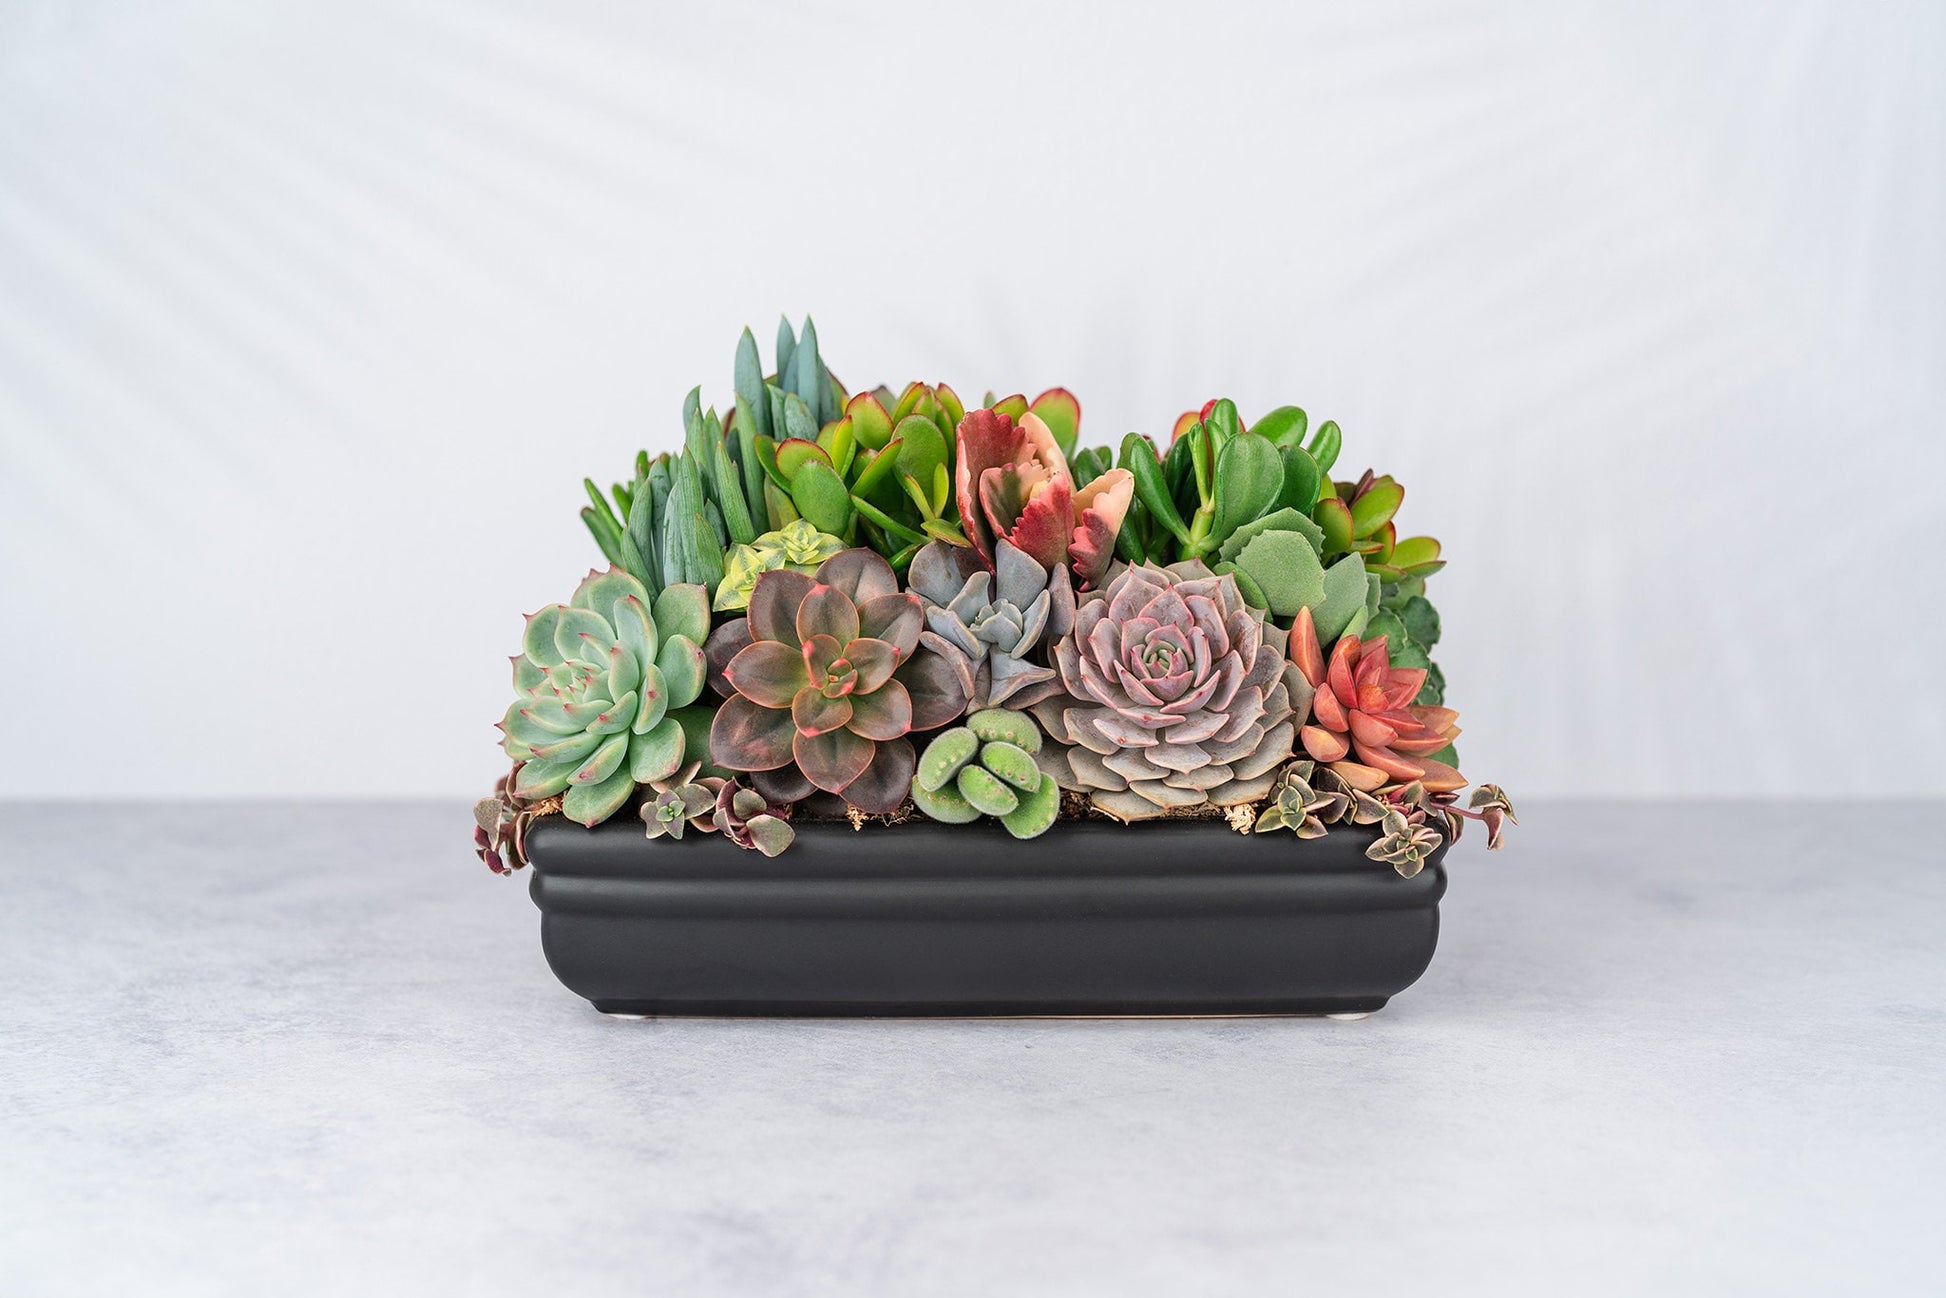 Low Profile Blac Succulent Arrangement Planter: Modern Living Succulent Gift in Ceramic Container, Centerpiece for Weddings & Events